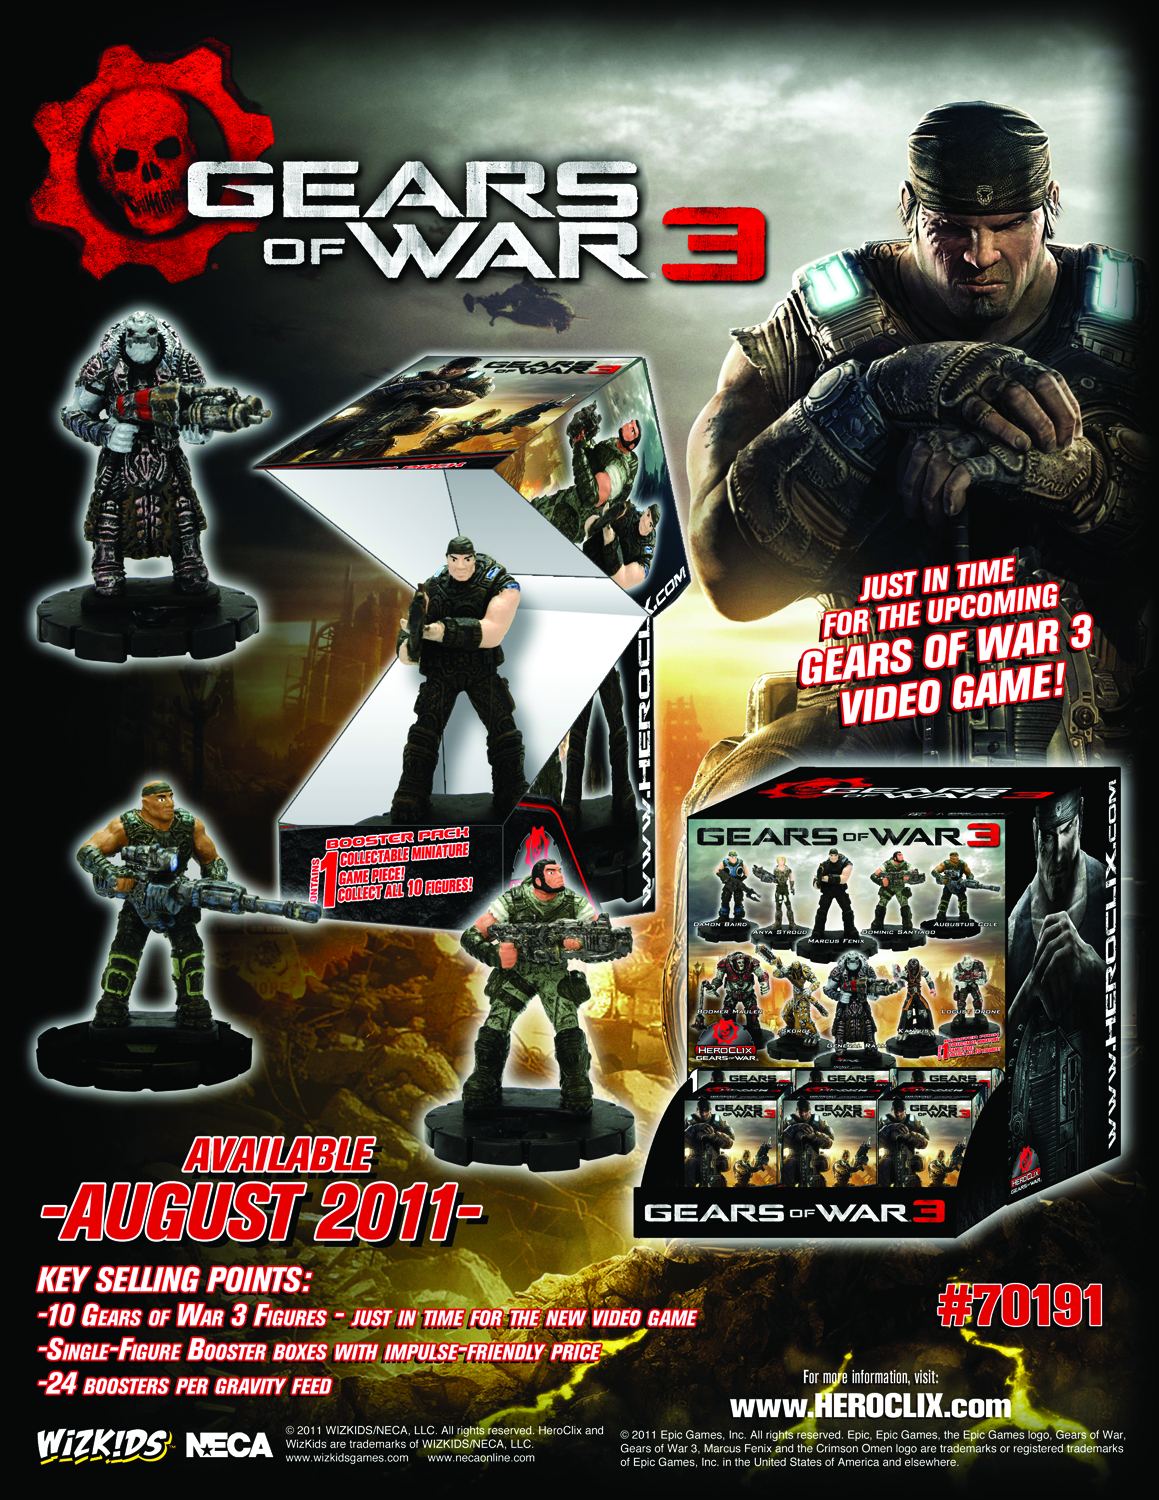 Jun1121 Epic Games Gears Of War Heroclix 24 Ct Gravity Feed Previews World